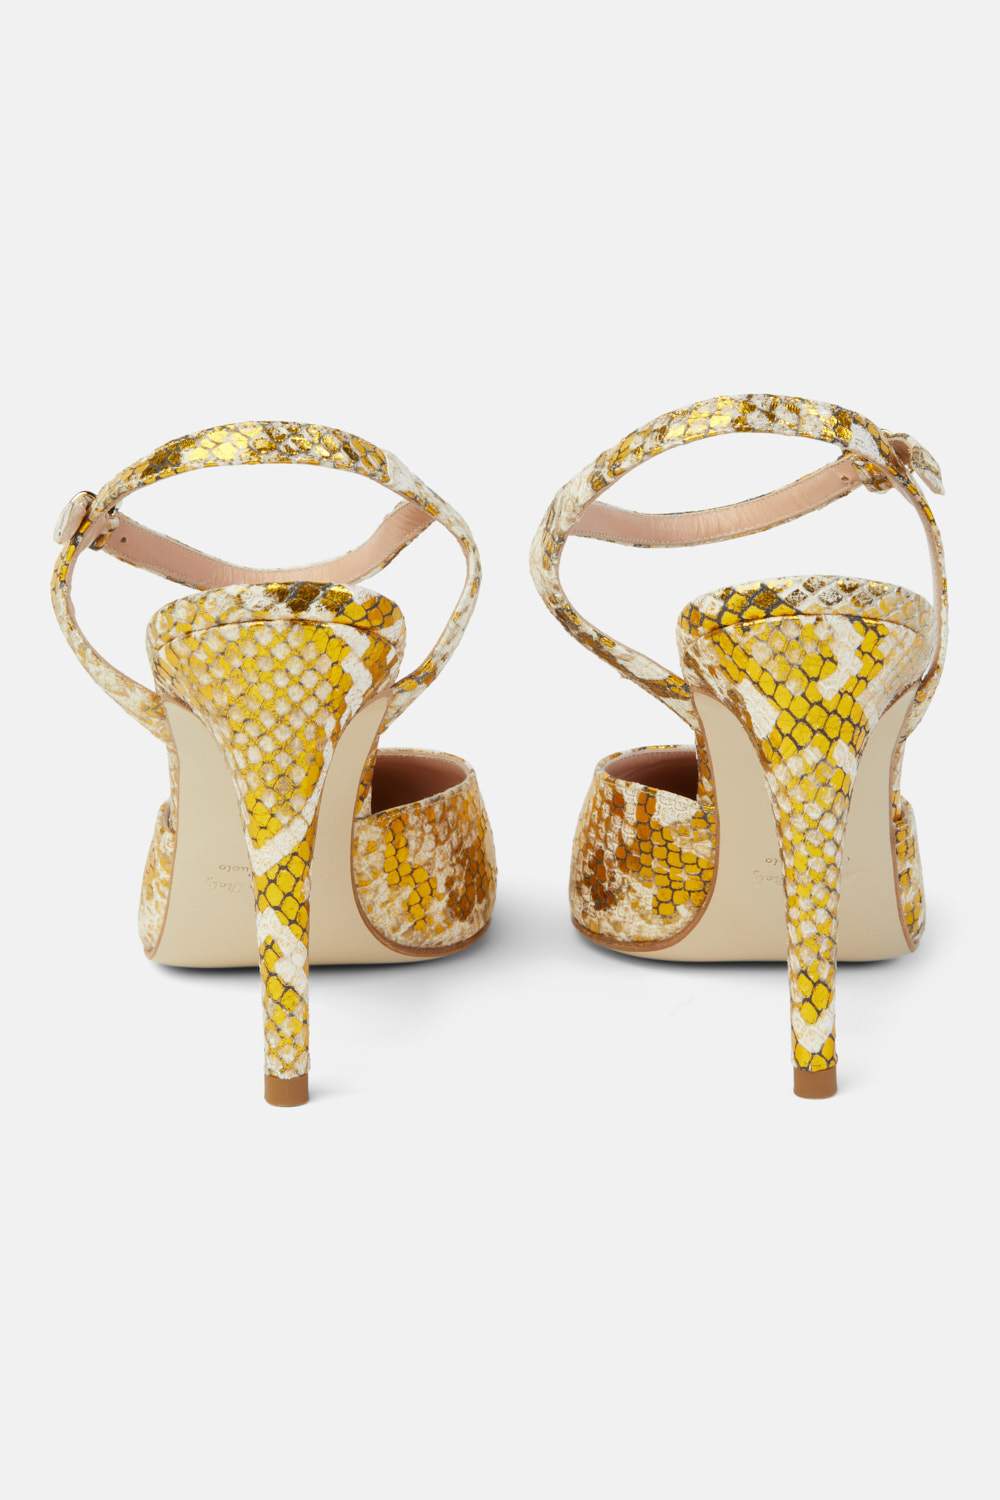 Danilo di Lea by Roselina SHOES Maci Gold Snake Print Leather Slingback Heels